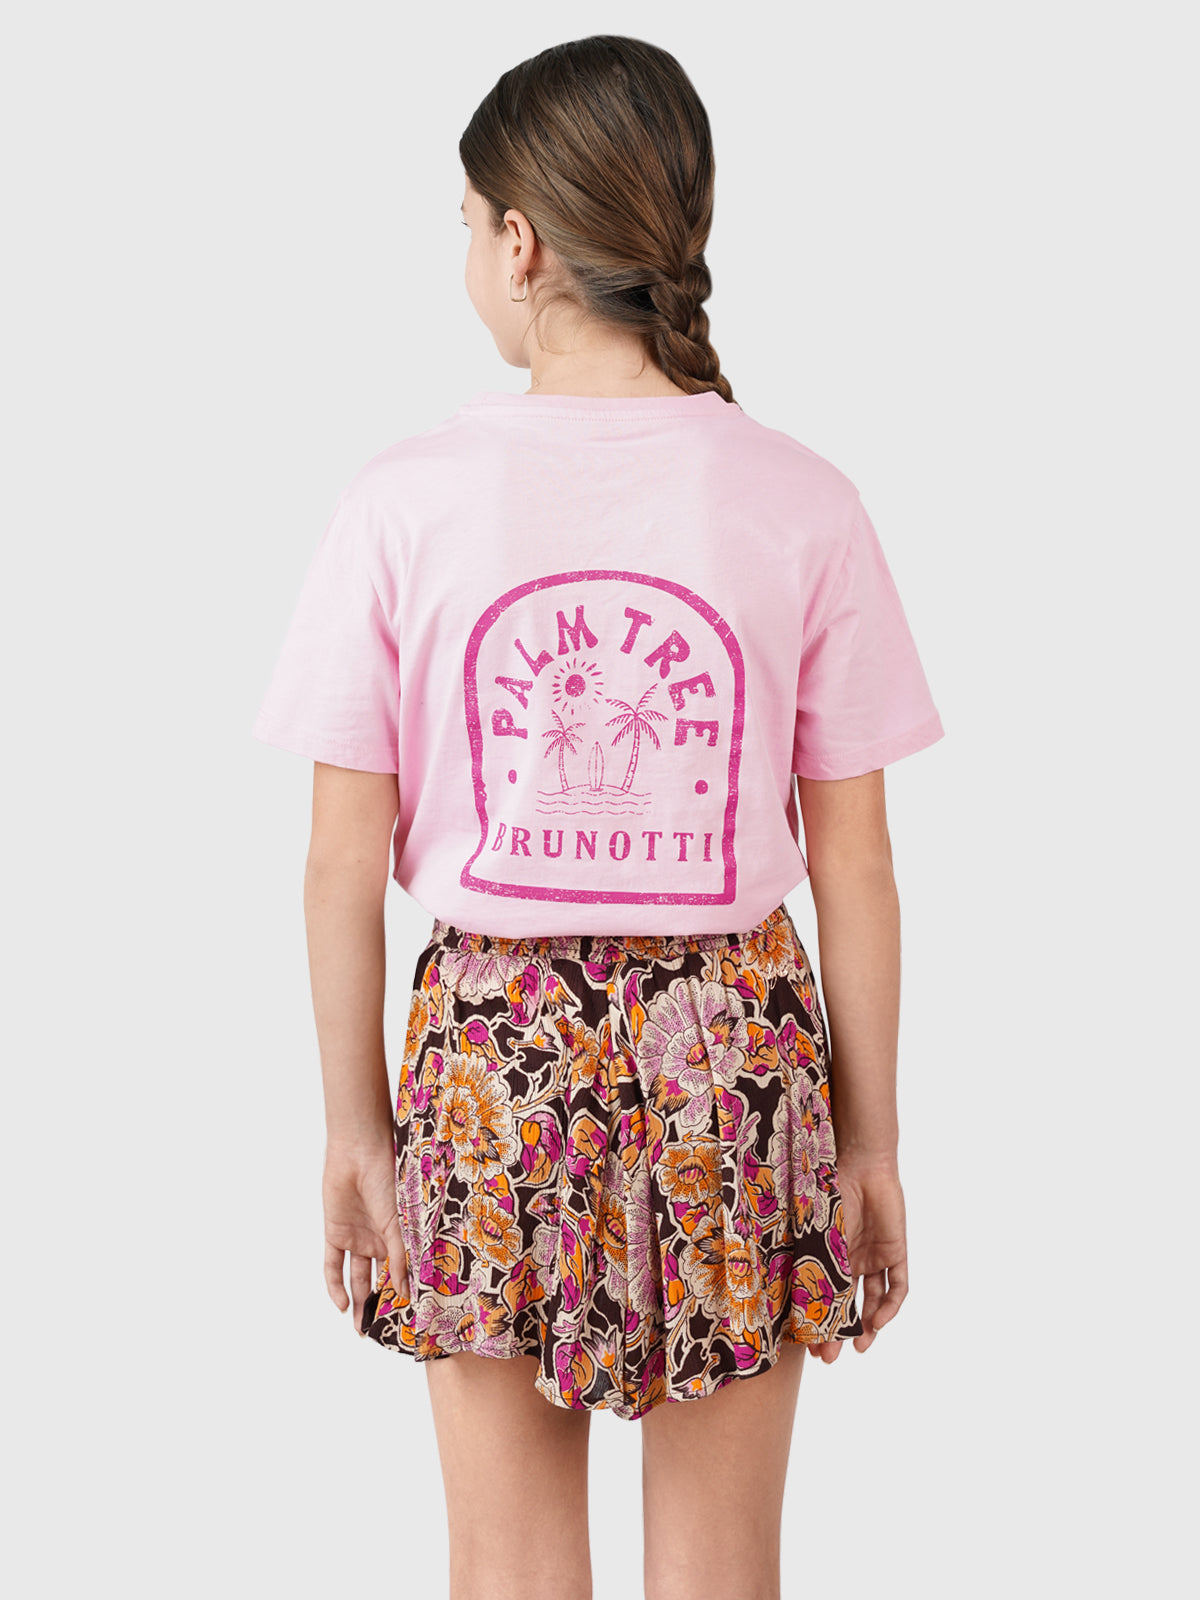 Vievy Girls T-shirt | Pink